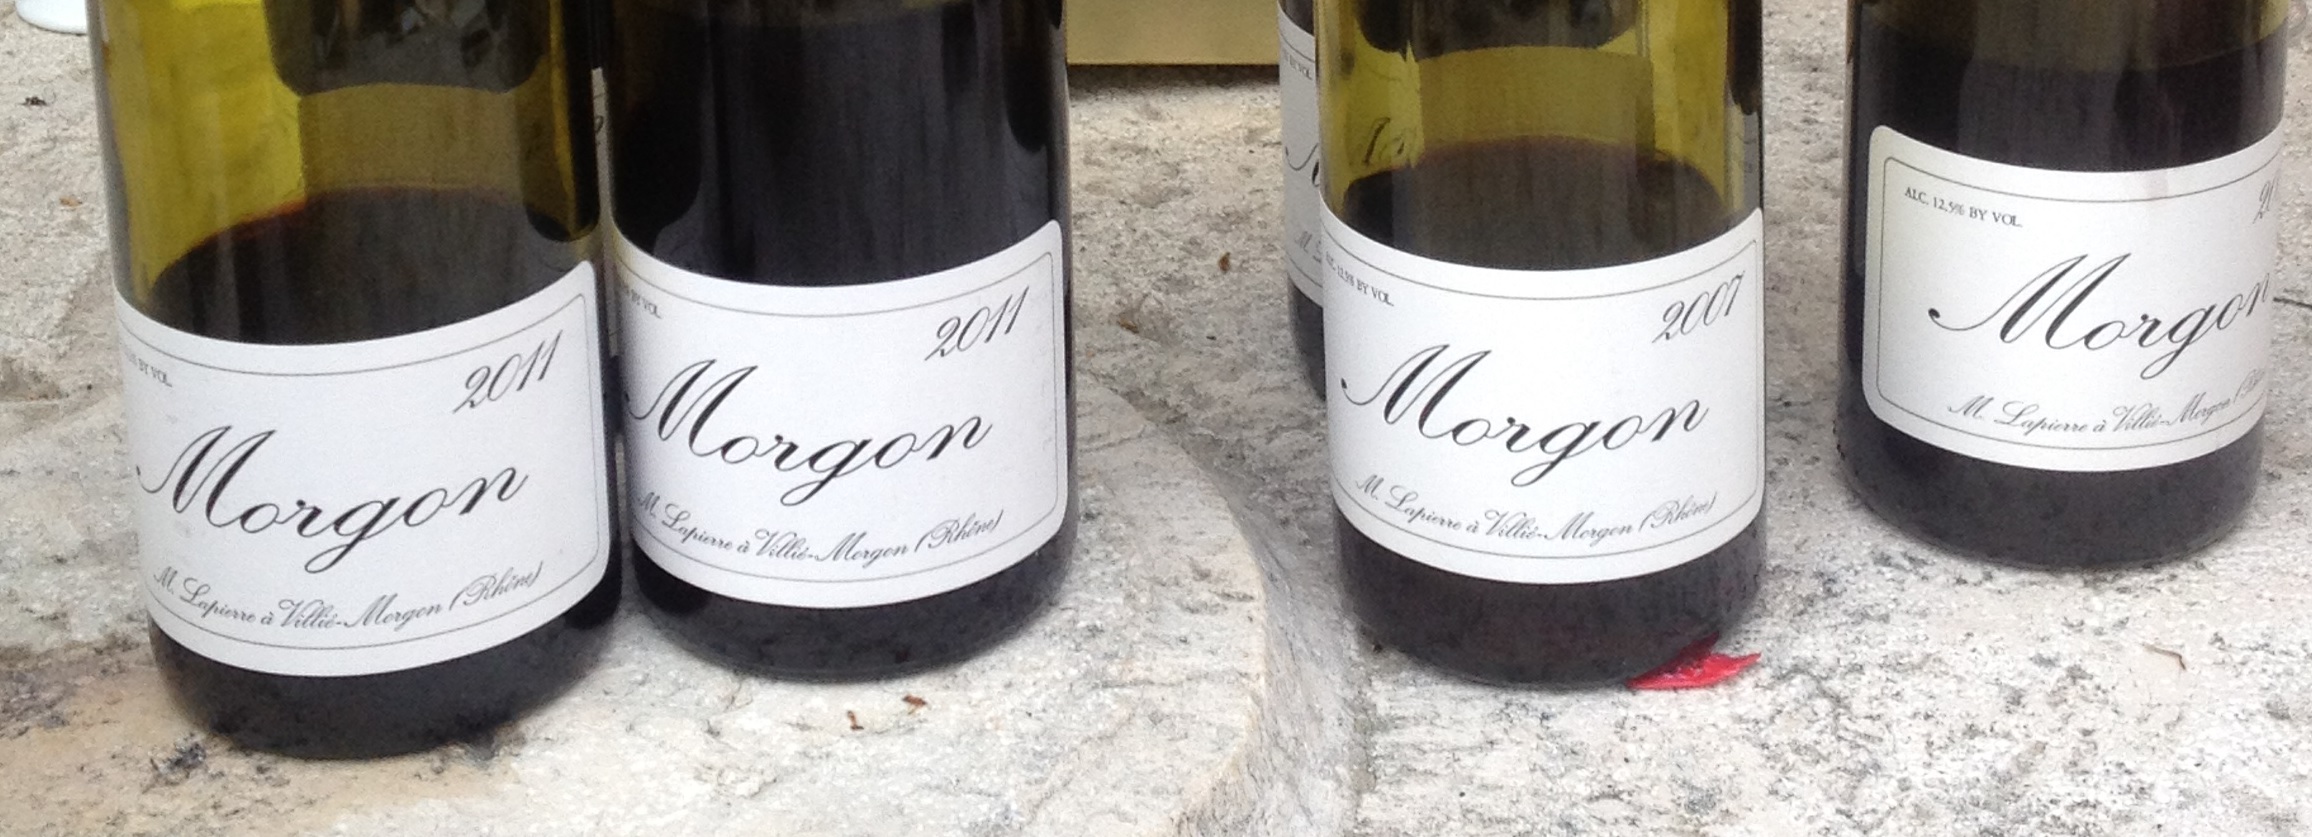 AOC Morgon Bottles Beaujolais